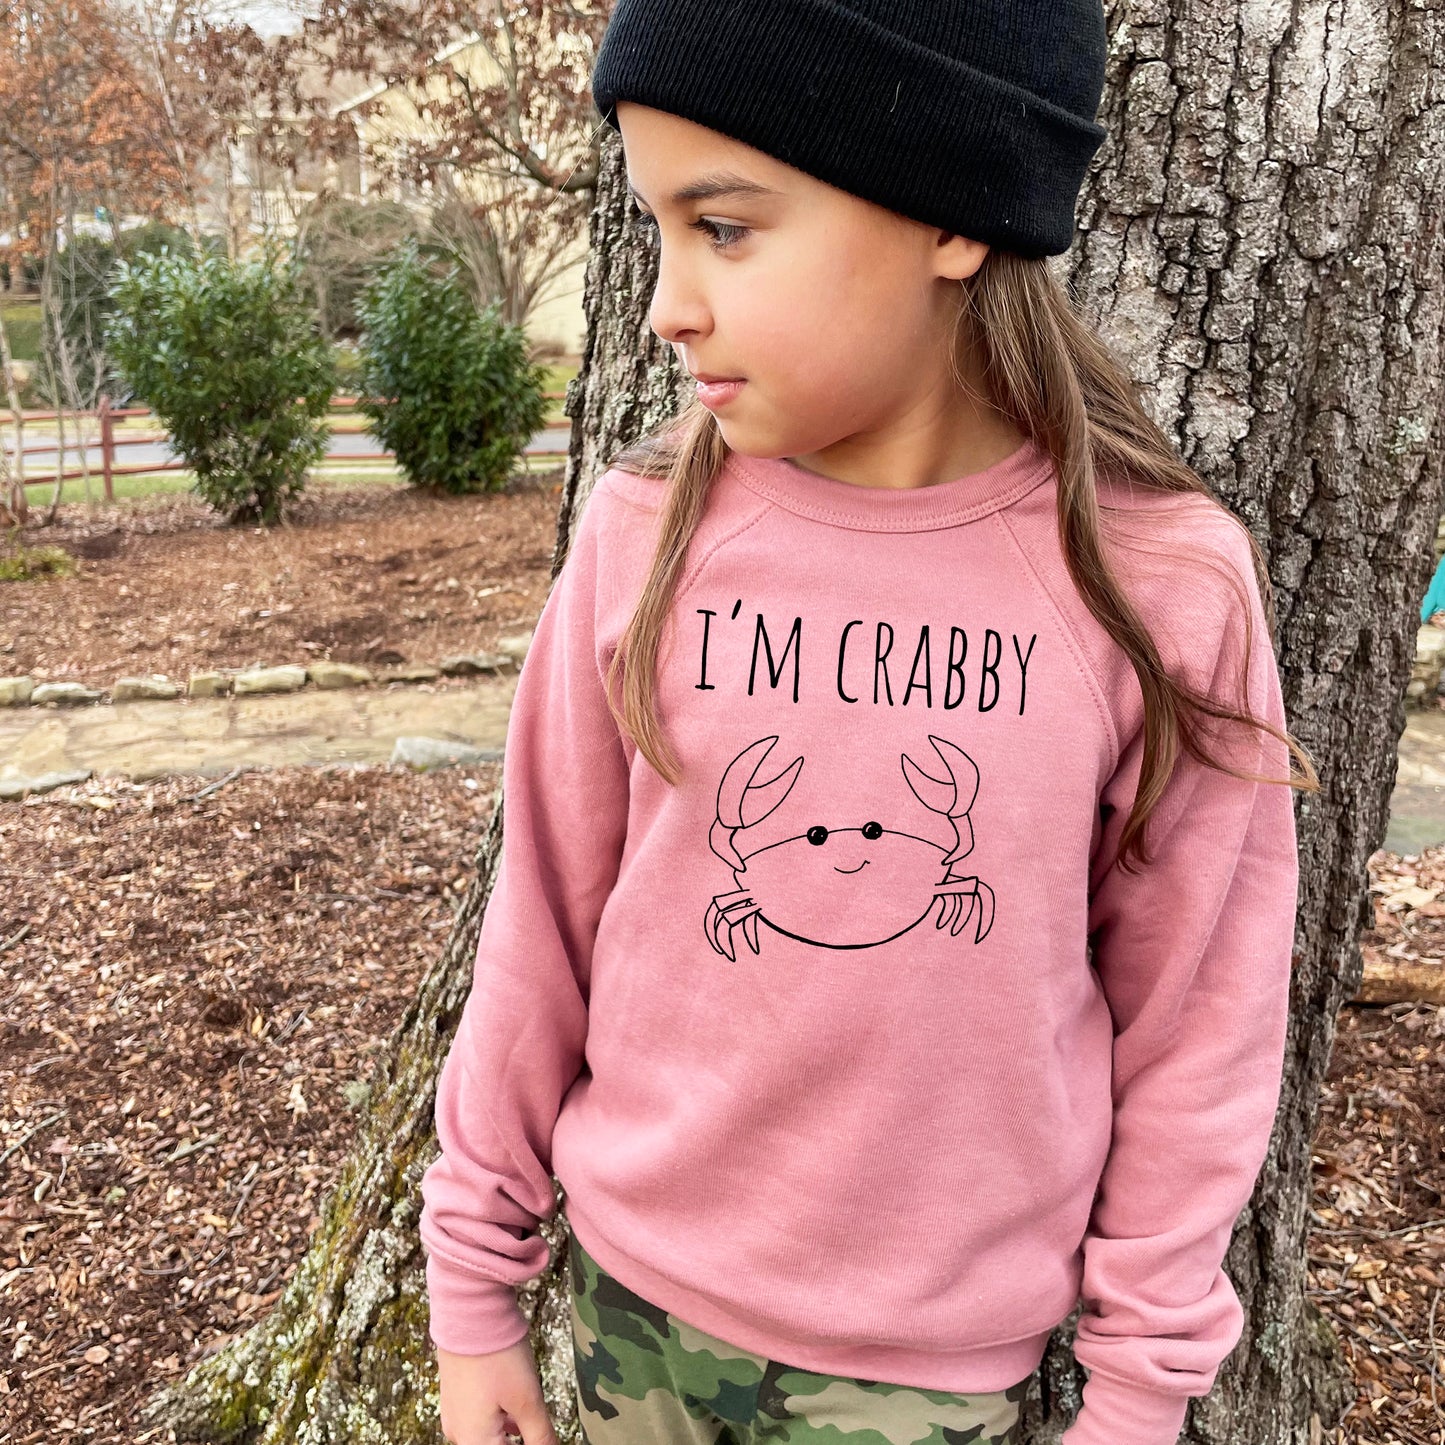 I'm Crabby - Kid's Sweatshirt - Heather Gray or Mauve